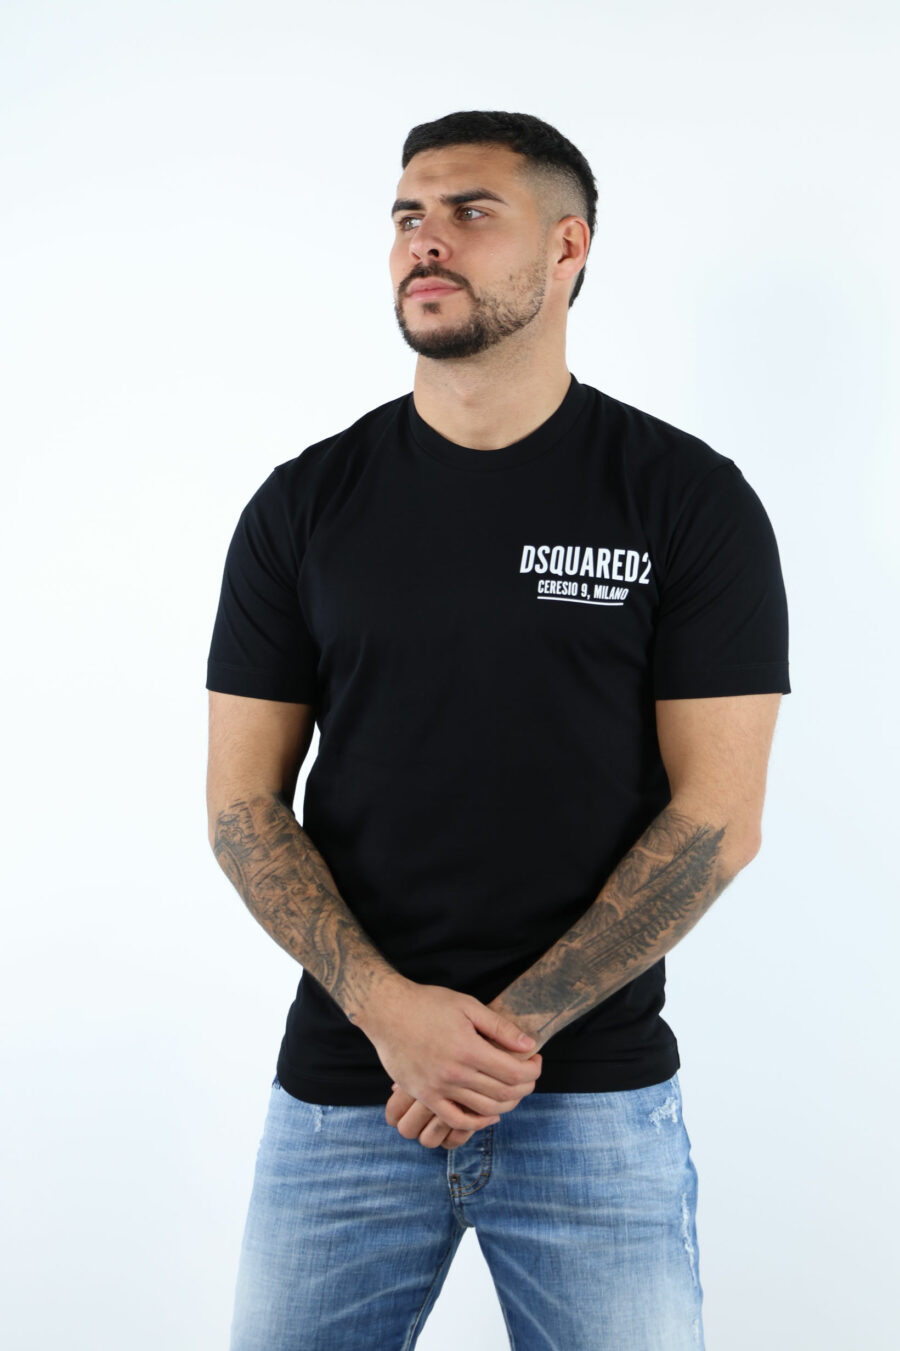 T-shirt preta com minilogo "ceresio 9, milano" - 106877